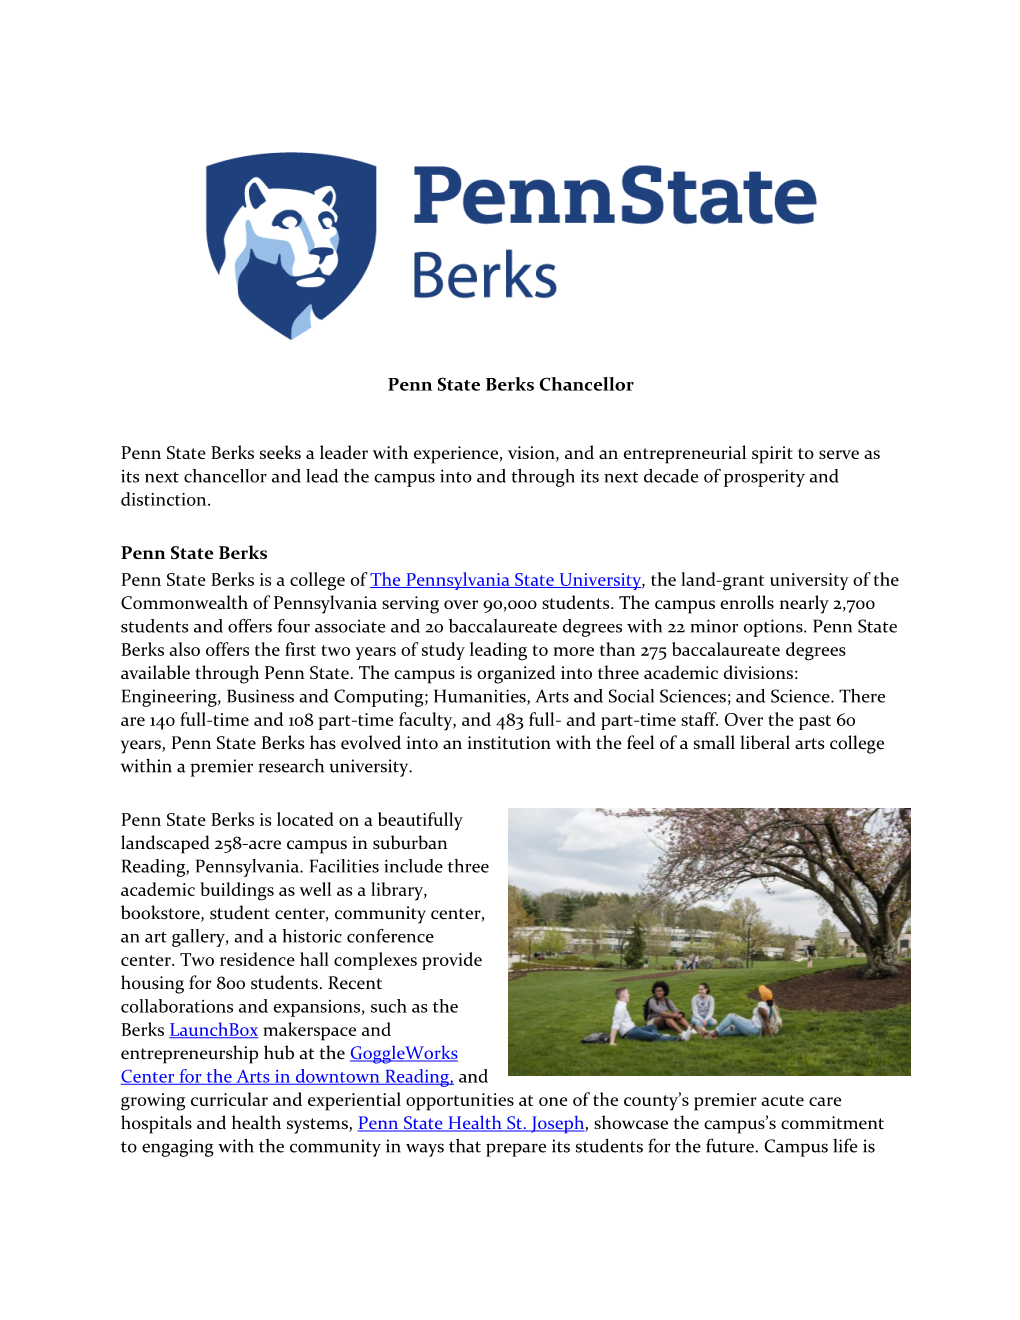 Penn State Berks Chancellor Penn State Berks